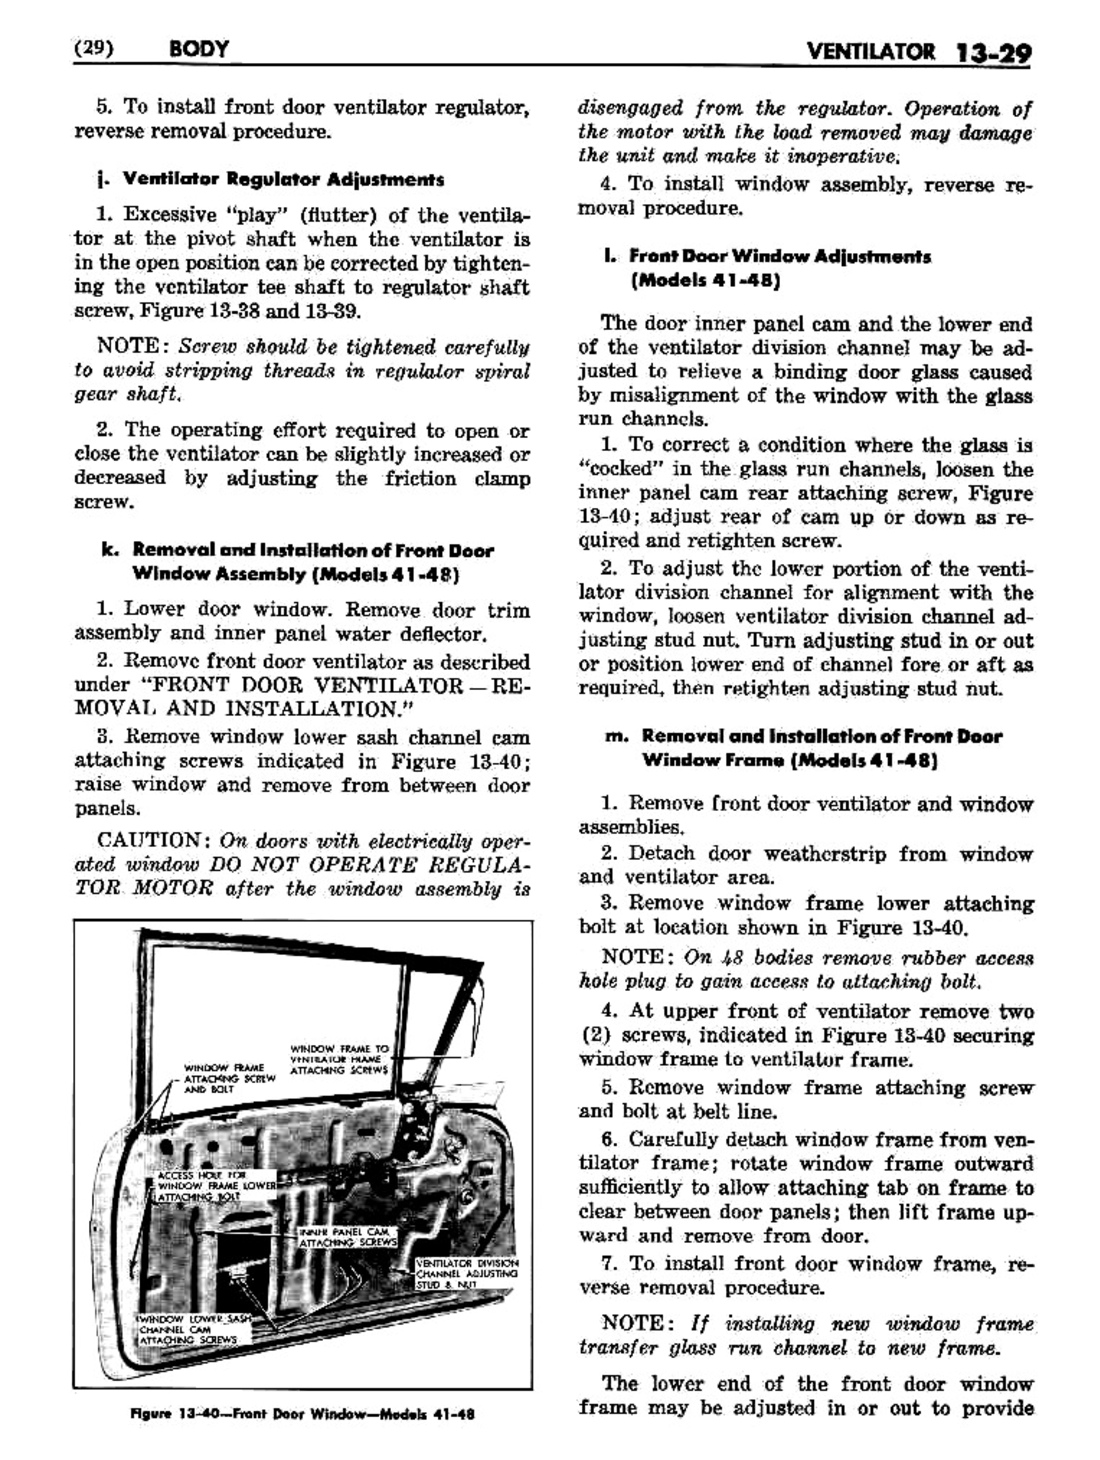 n_1957 Buick Body Service Manual-031-031.jpg